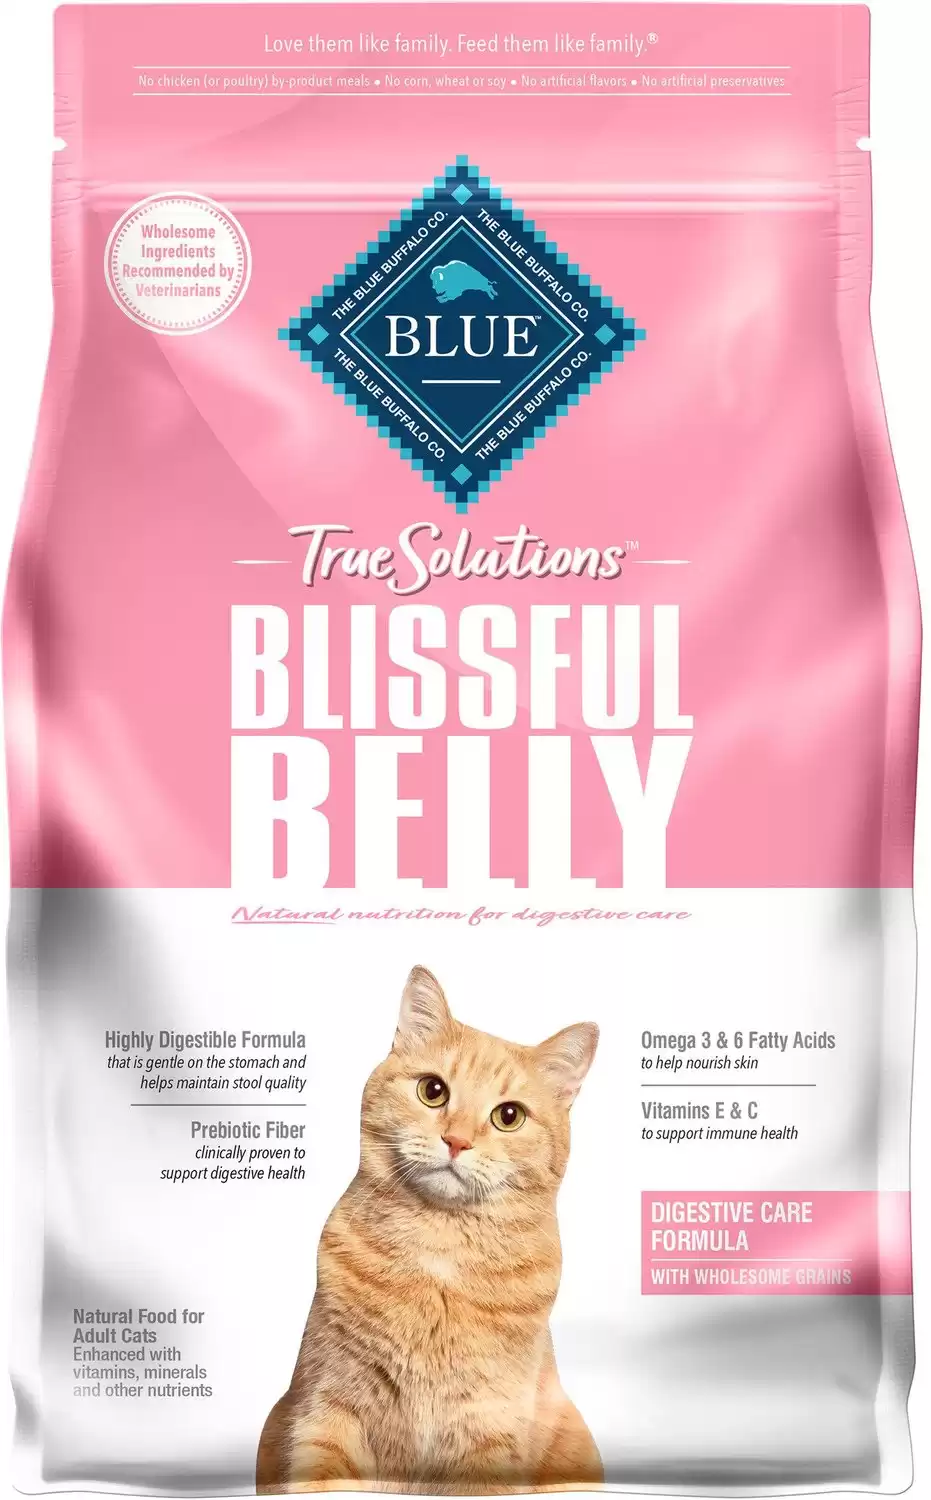 Blue Buffalo True Solutions Blissful Belly Digestive Care Formula Dry Cat Food